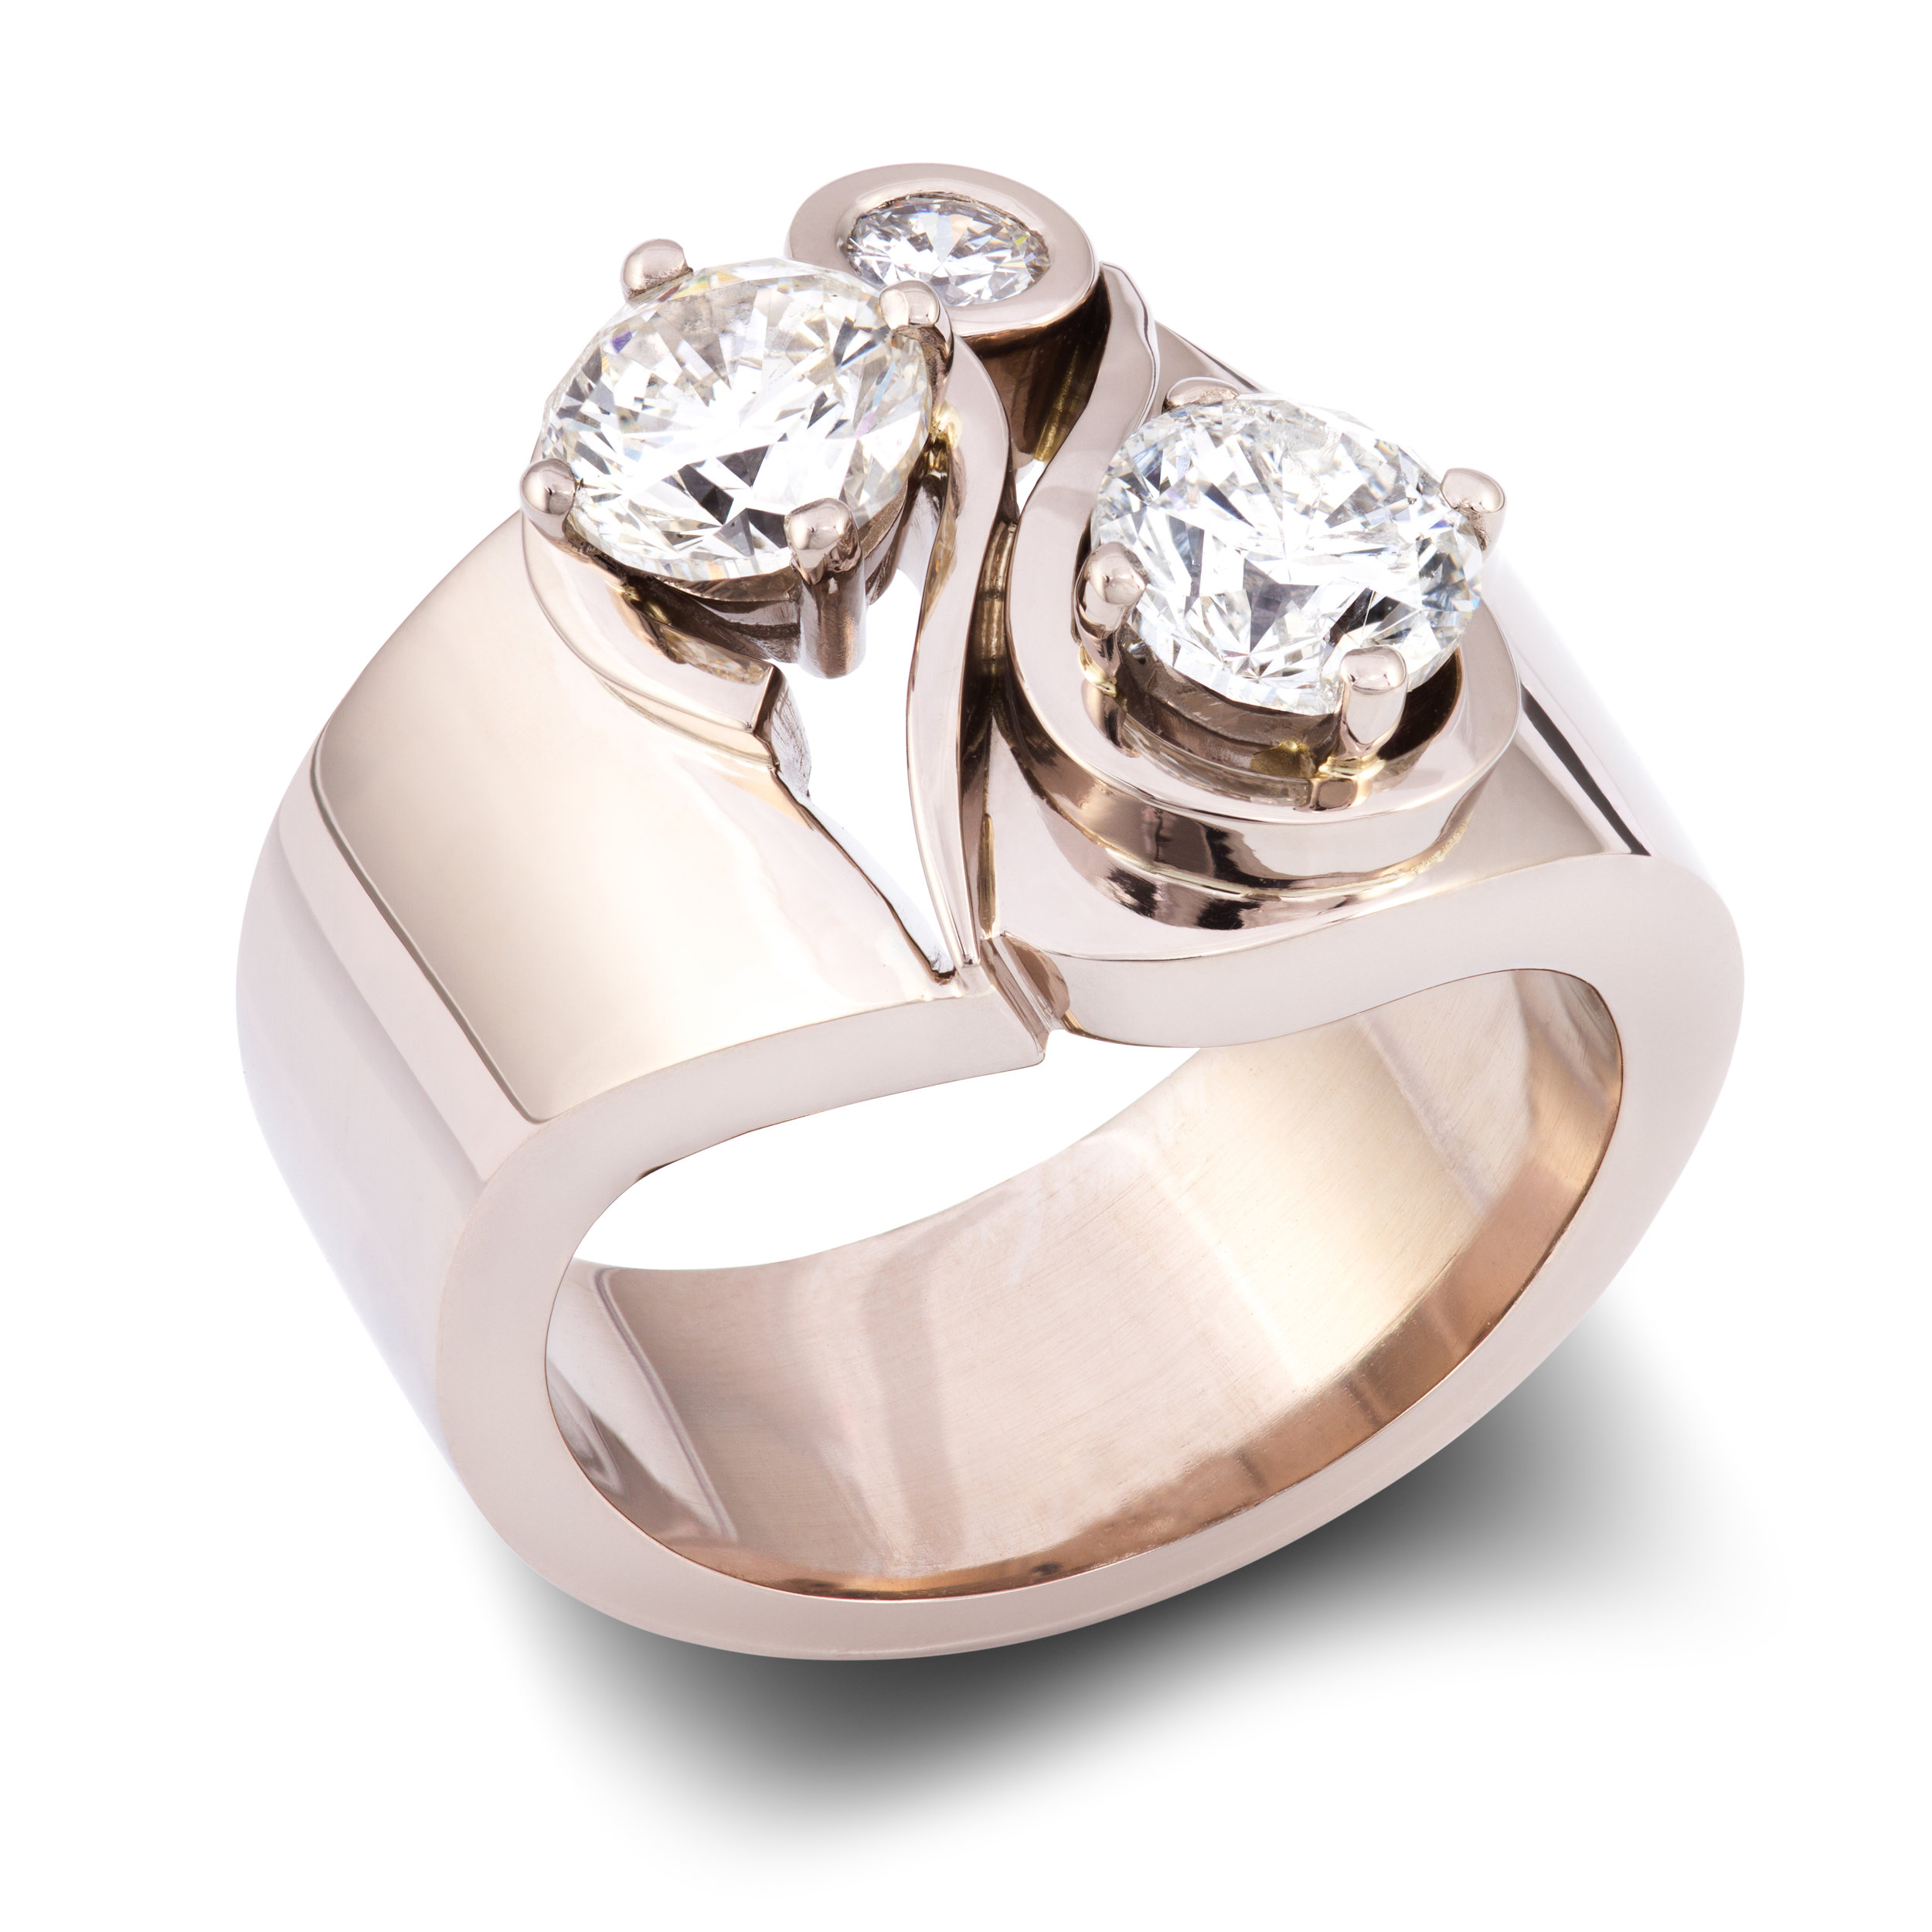 3 Reasons Why You Should Choose Custom Wedding Rings - Eliza Page